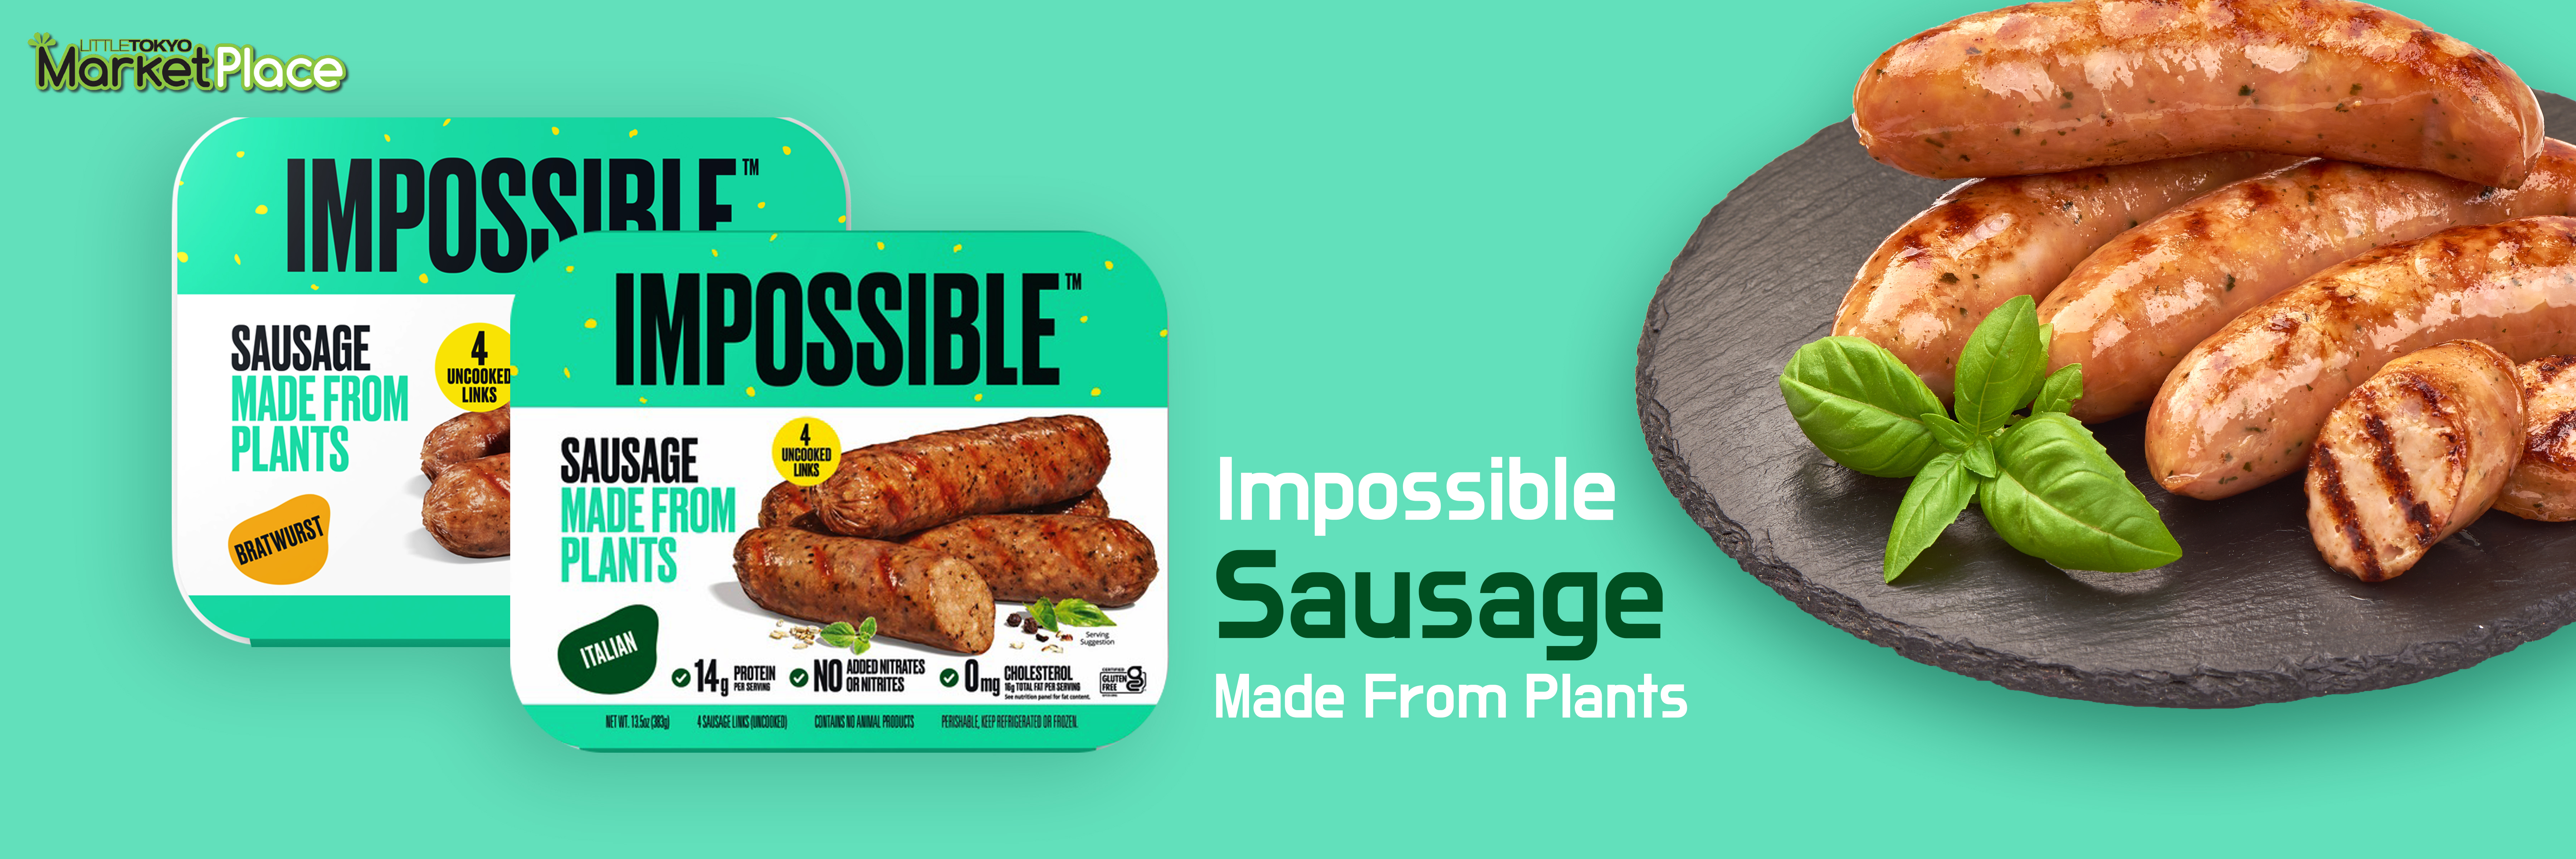 Impossible Sausage r2.jpg